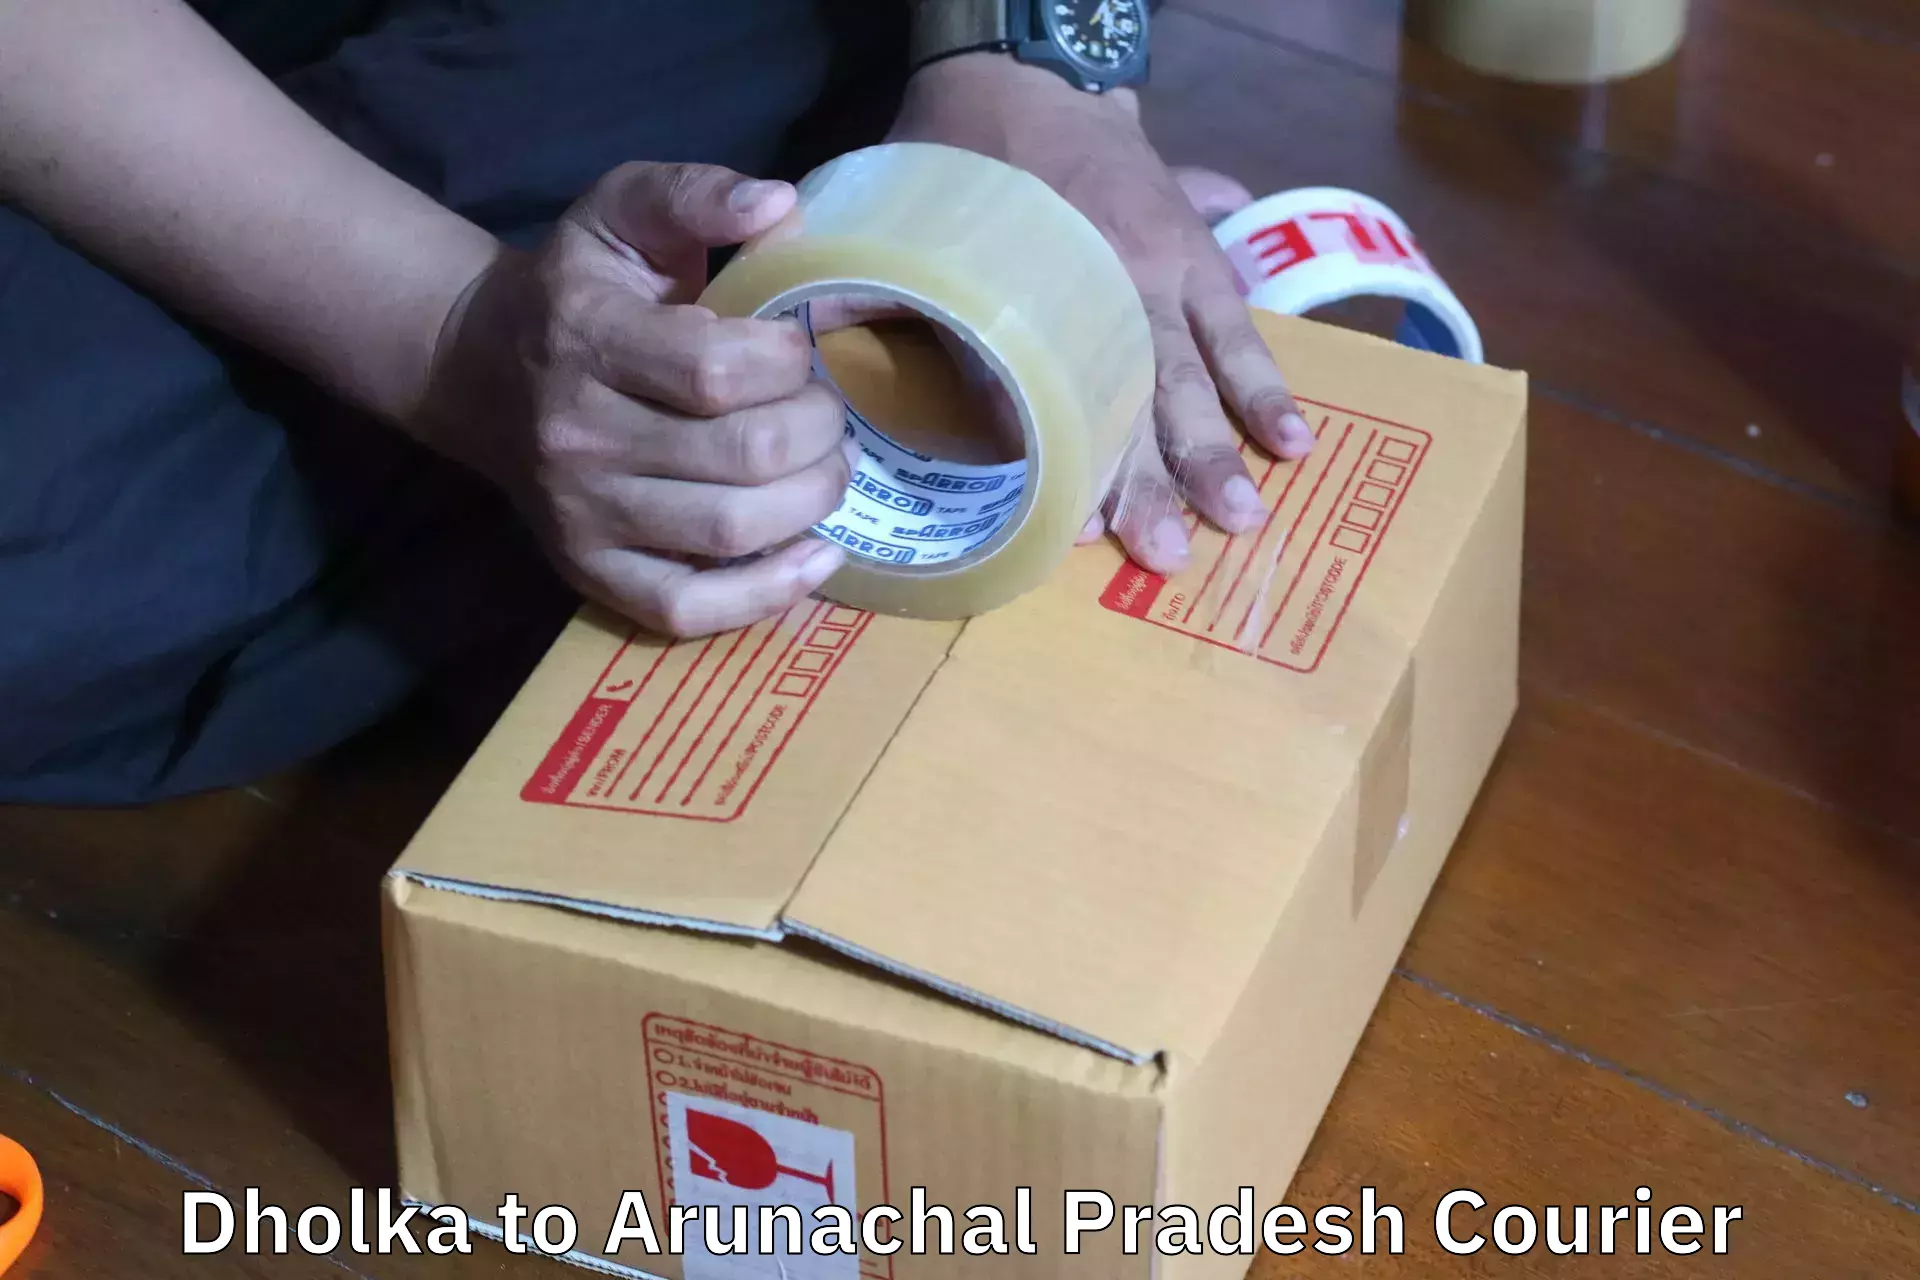 Professional moving company Dholka to Arunachal Pradesh